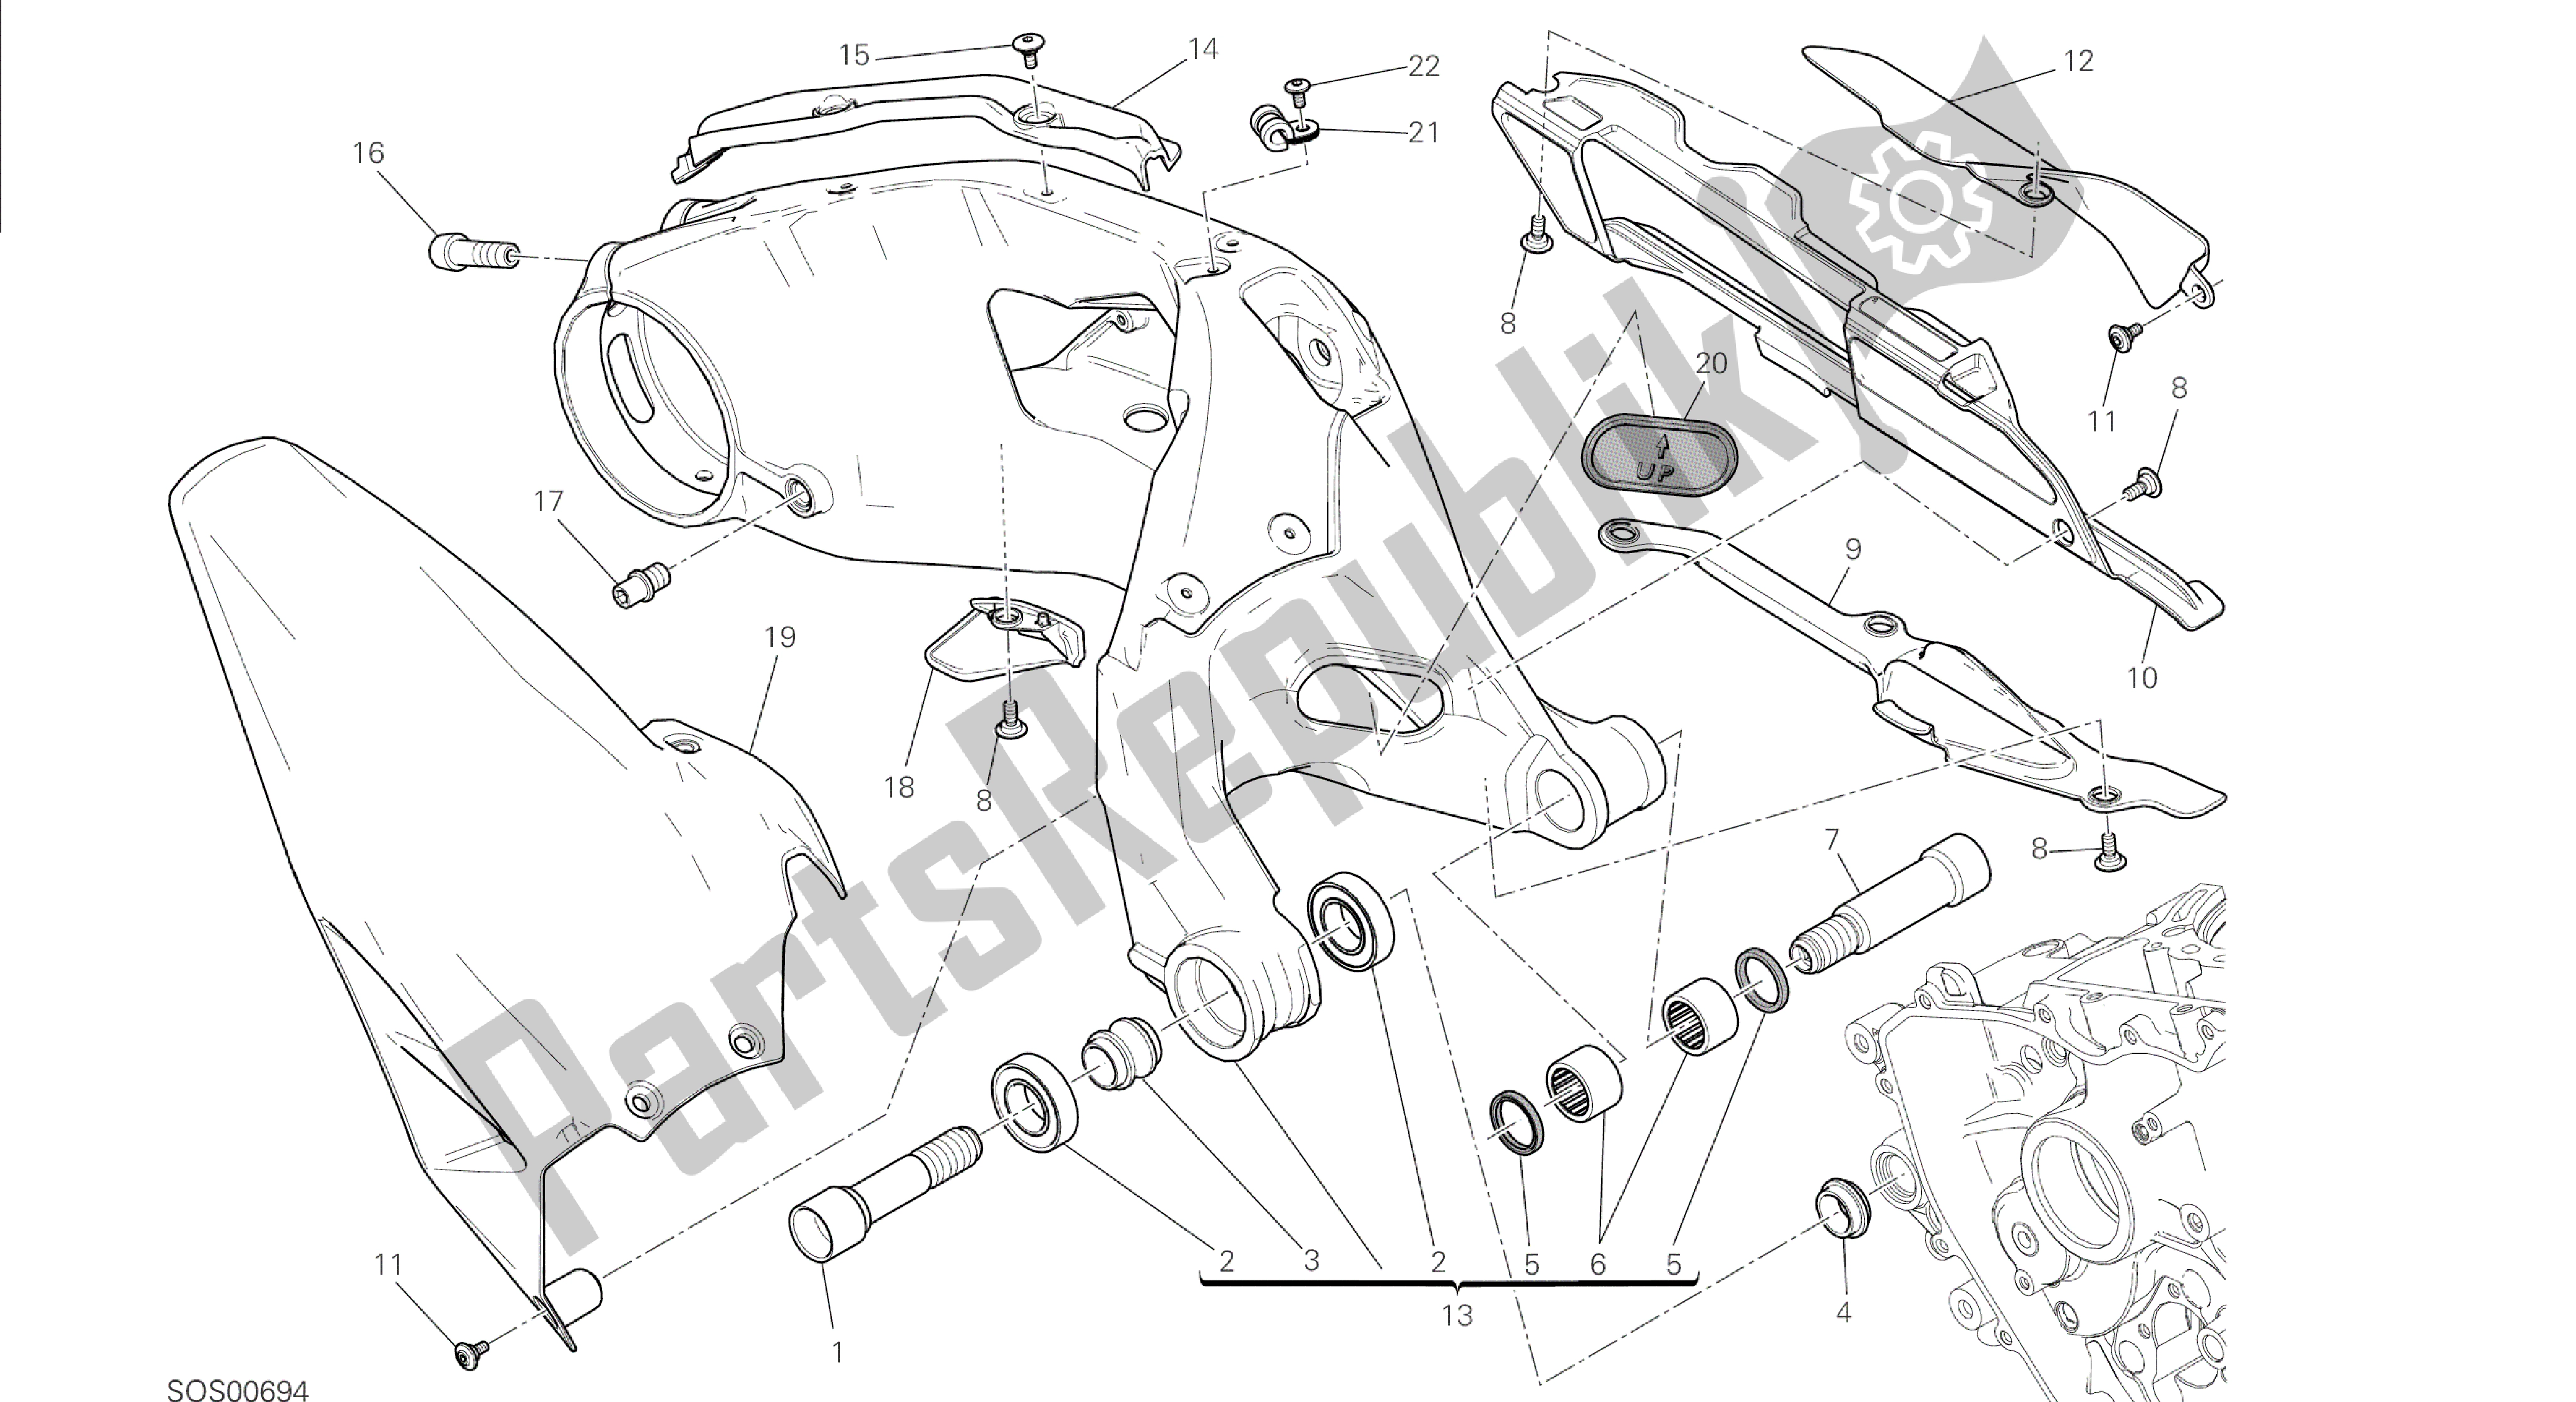 Alle onderdelen voor de Tekening 28a - Forcellone Posteriore [mod: 1299; Xst: Aus, Eur, Fra, Jap, Twn] Groepsframe van de Ducati Panigale 1299 2015